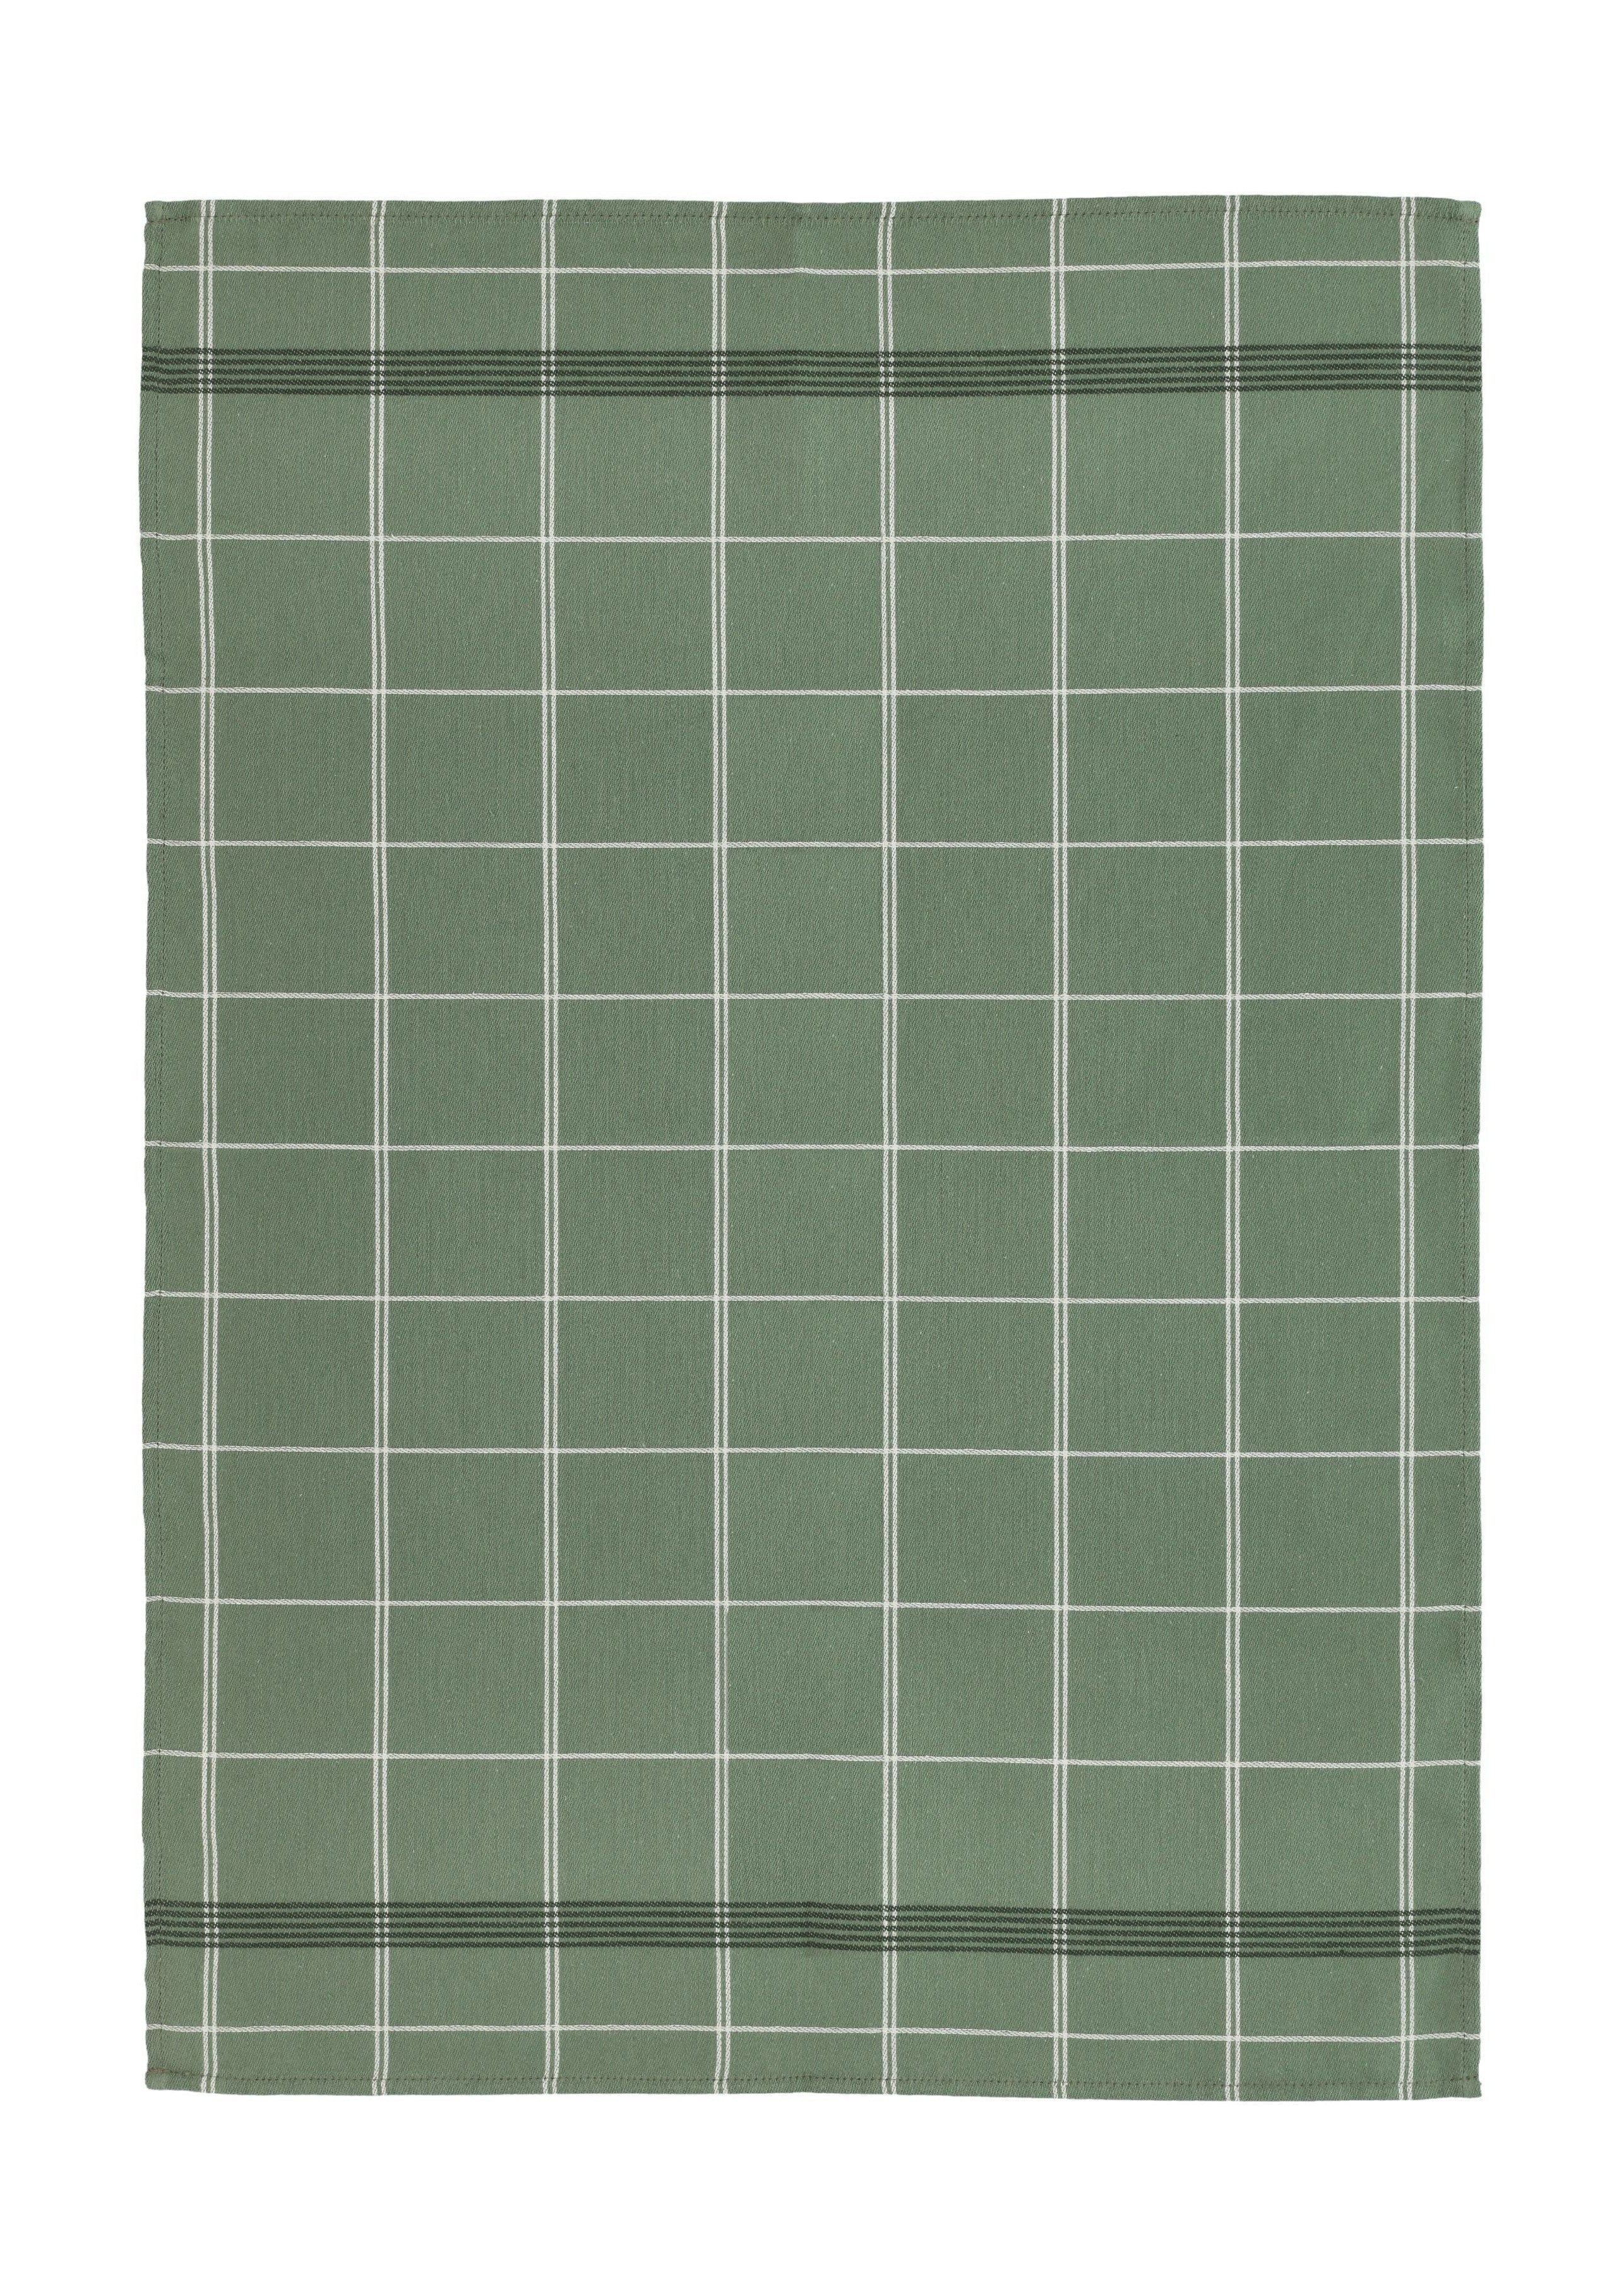 Sdraio per tè minimo södahl 50 x 70 cm, verde